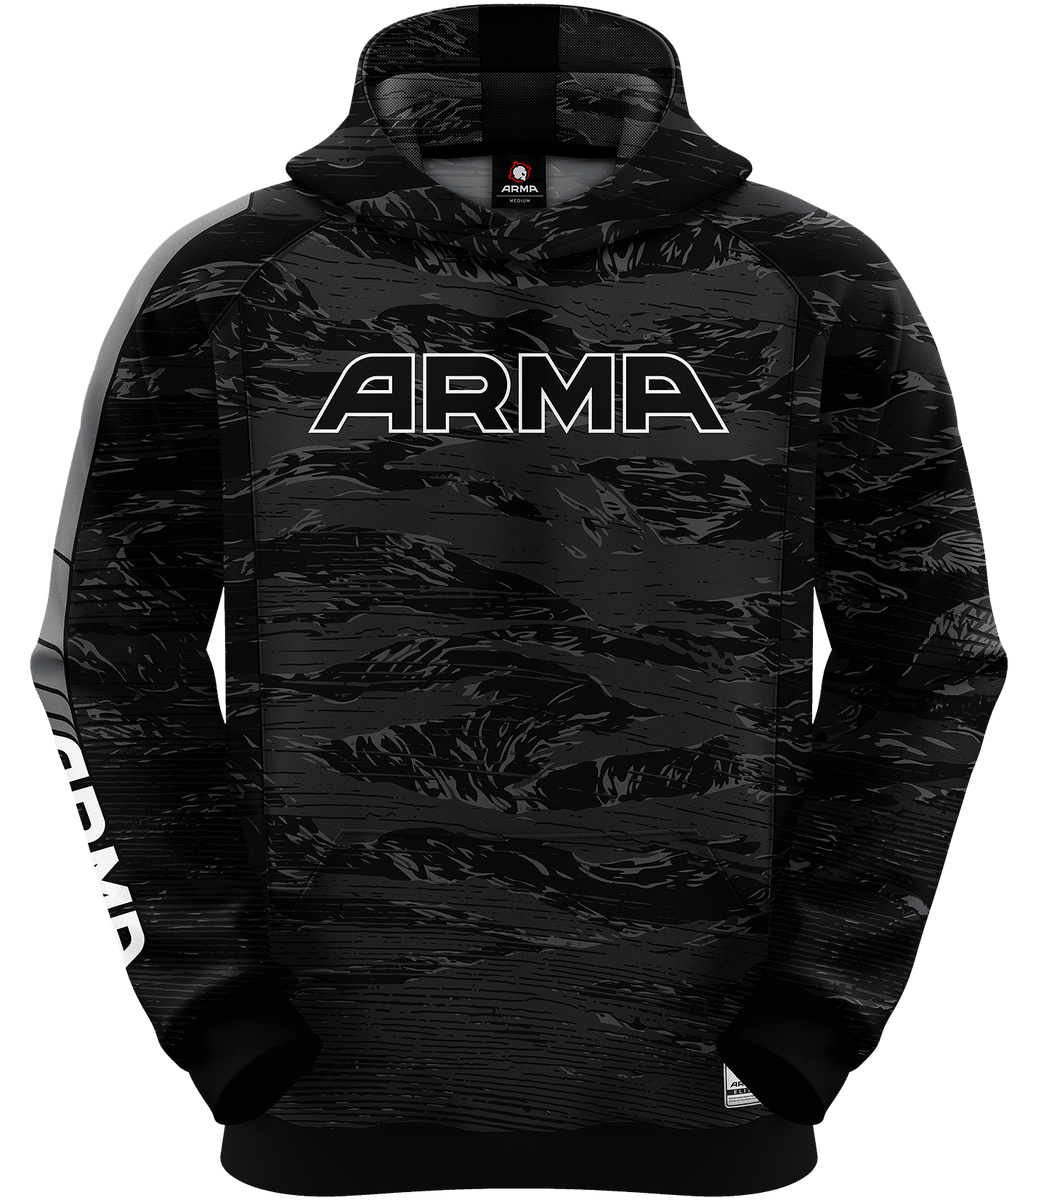 ARMA ELITE Hoodie - Black Camo - Custom Esports Jersey by ARMA